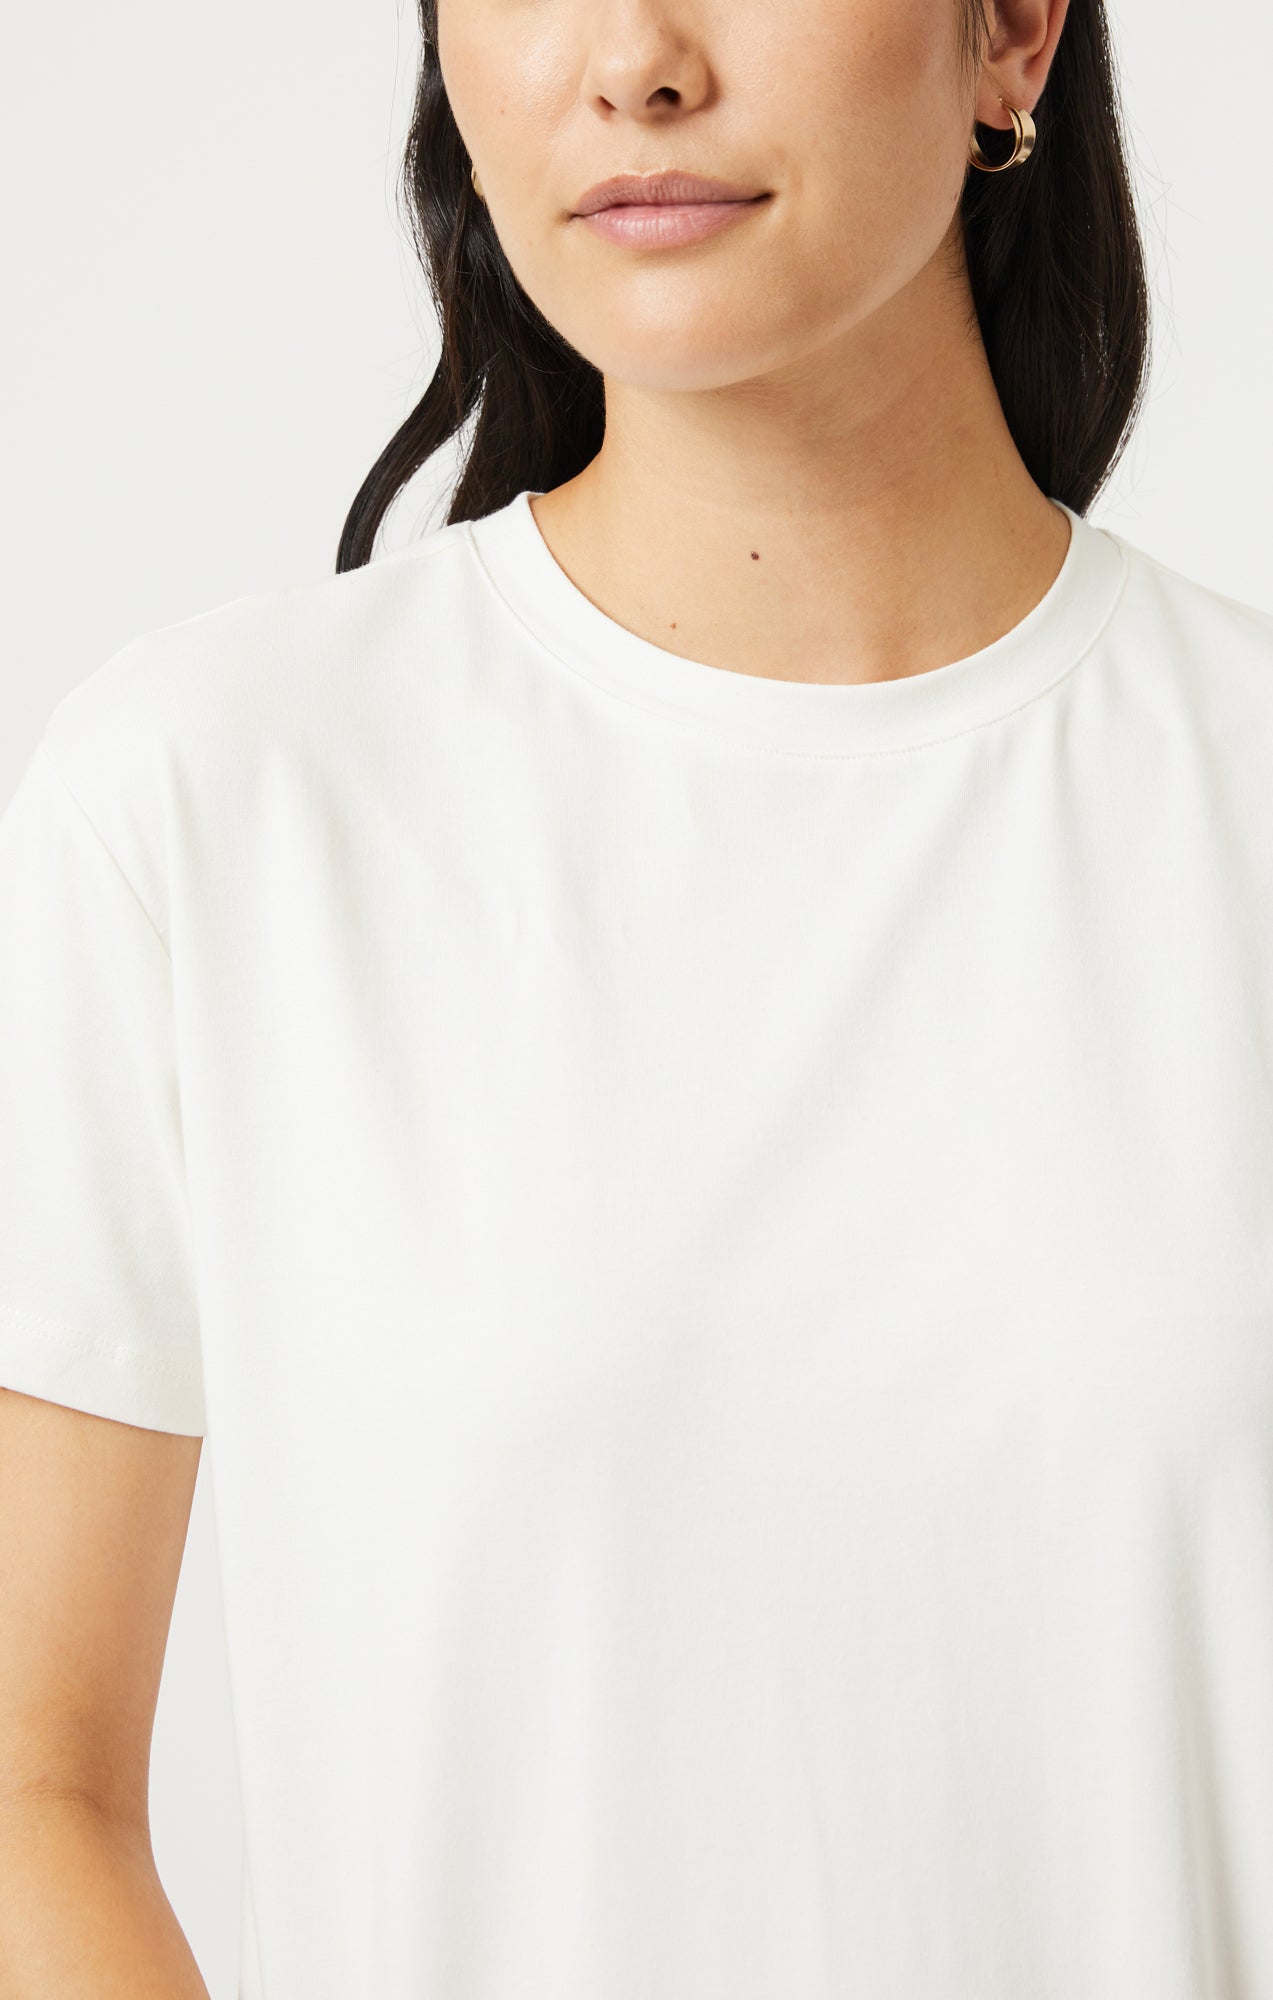 Emavic Women's Cotton Lightly Padded Non-Wired T-Shirt Bra Women